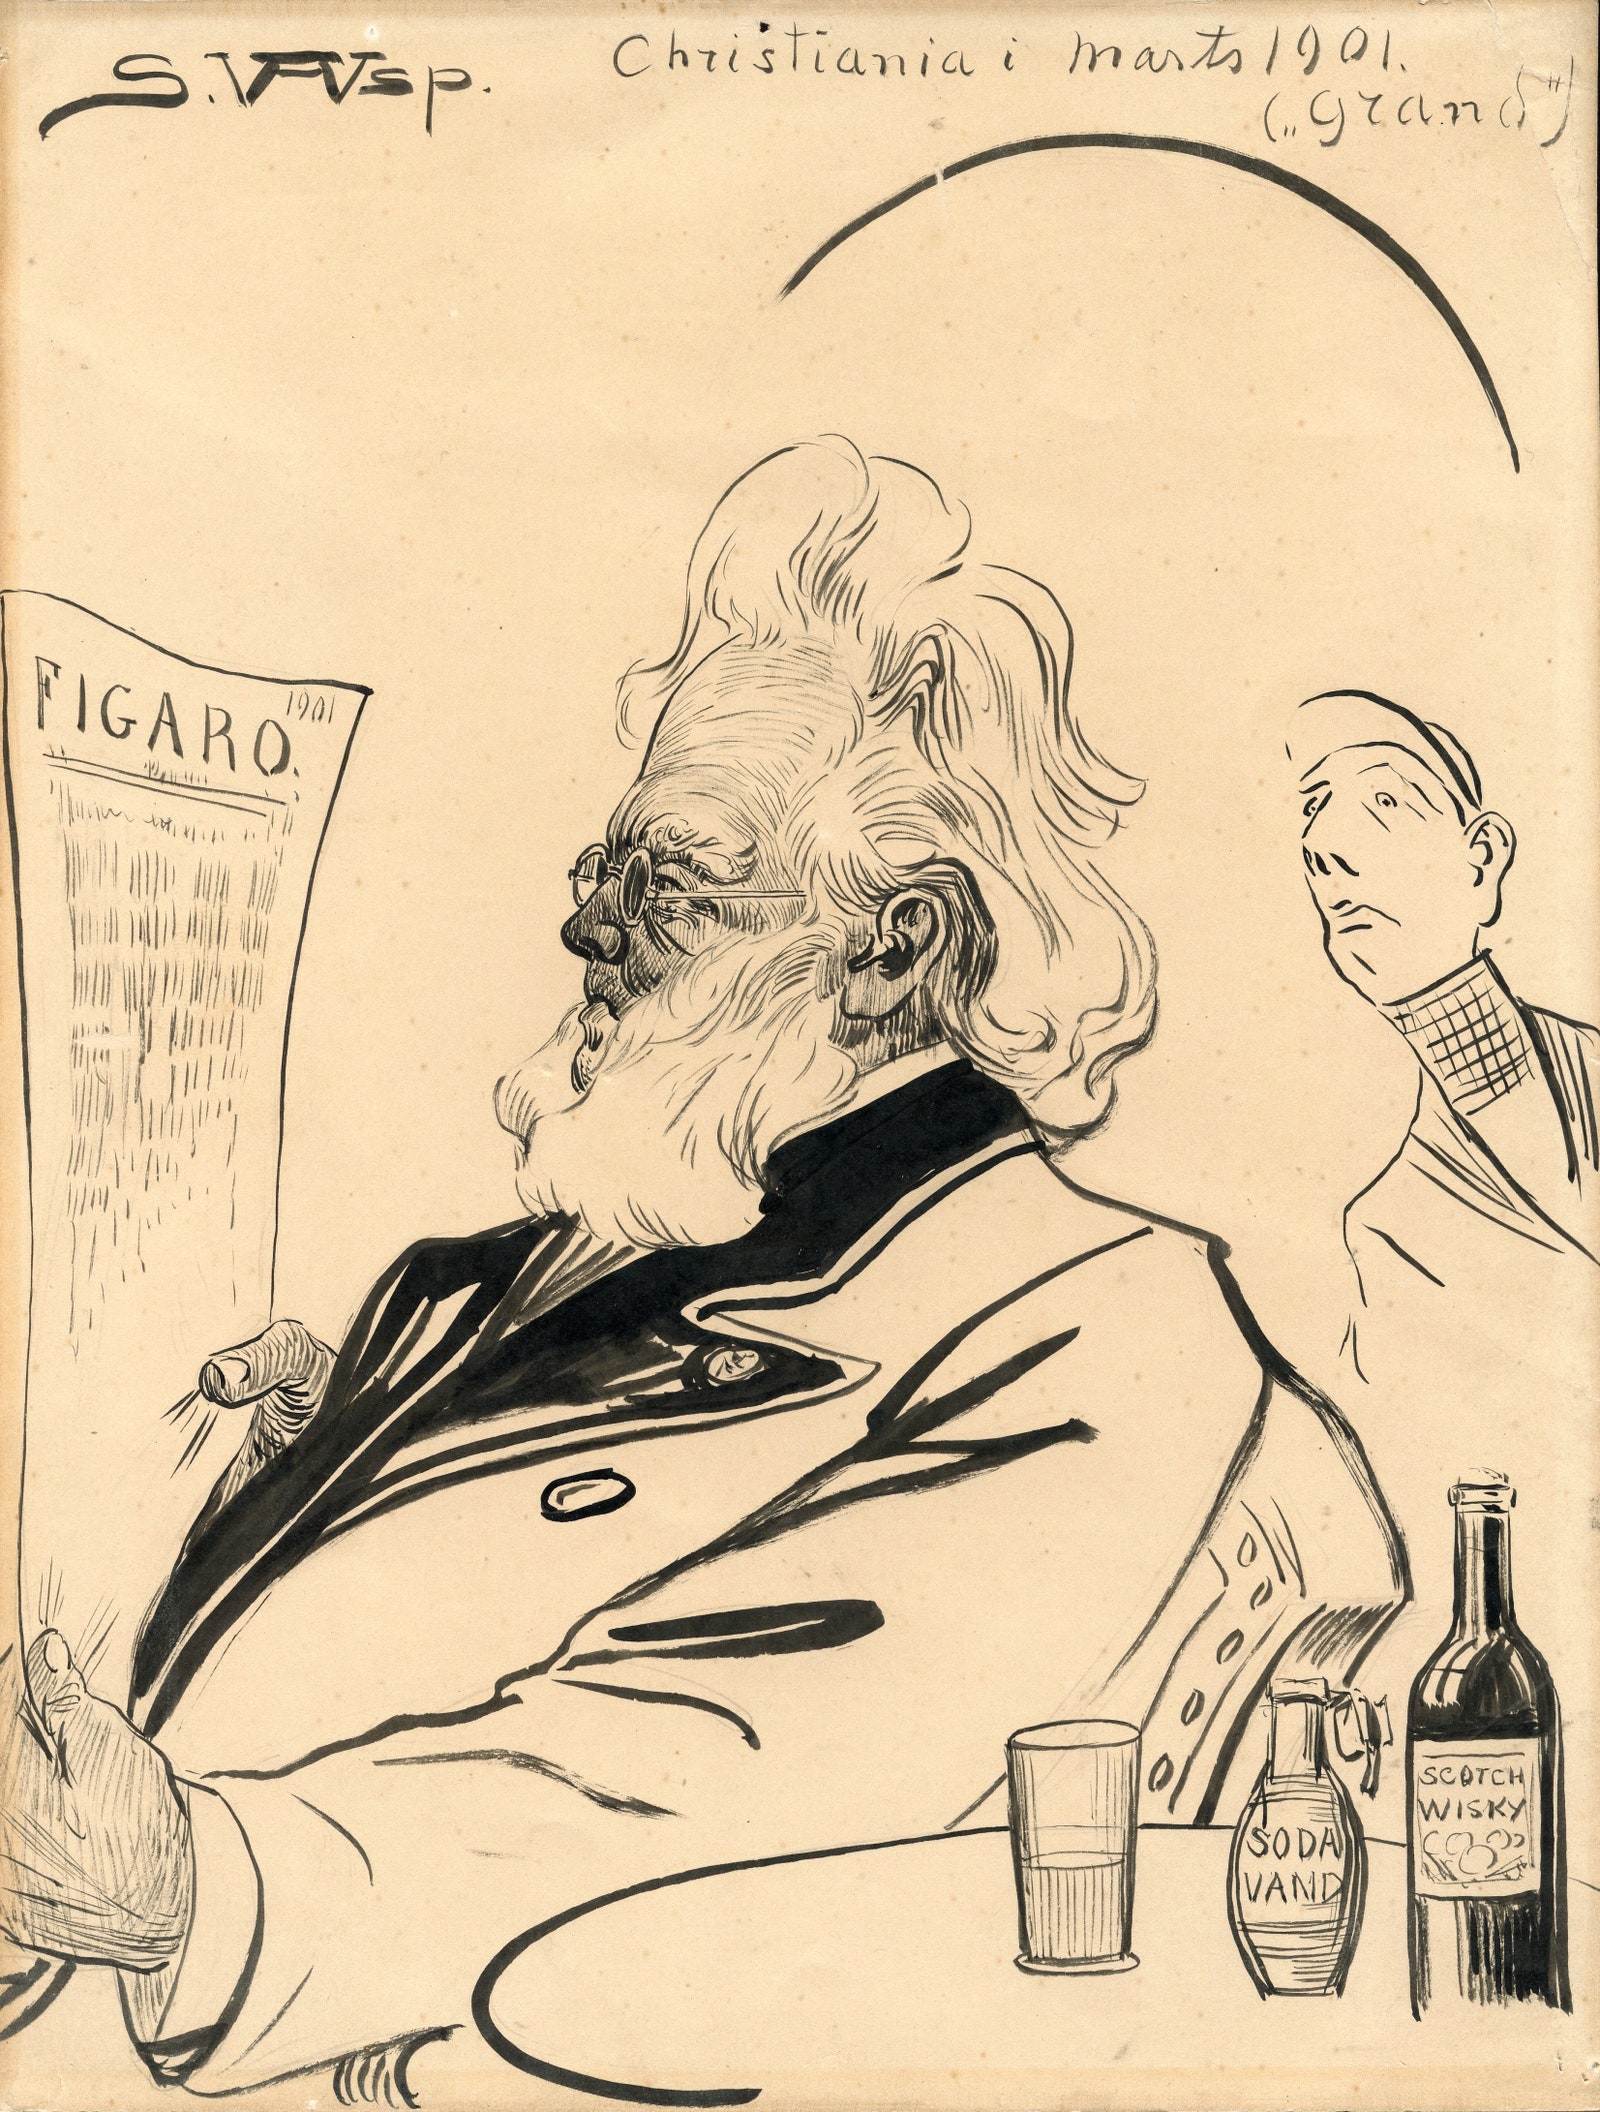 A cartoon drawing of Henrik Ibsen at Grand by Georg Sigurd WetterhoffAsp March 1901